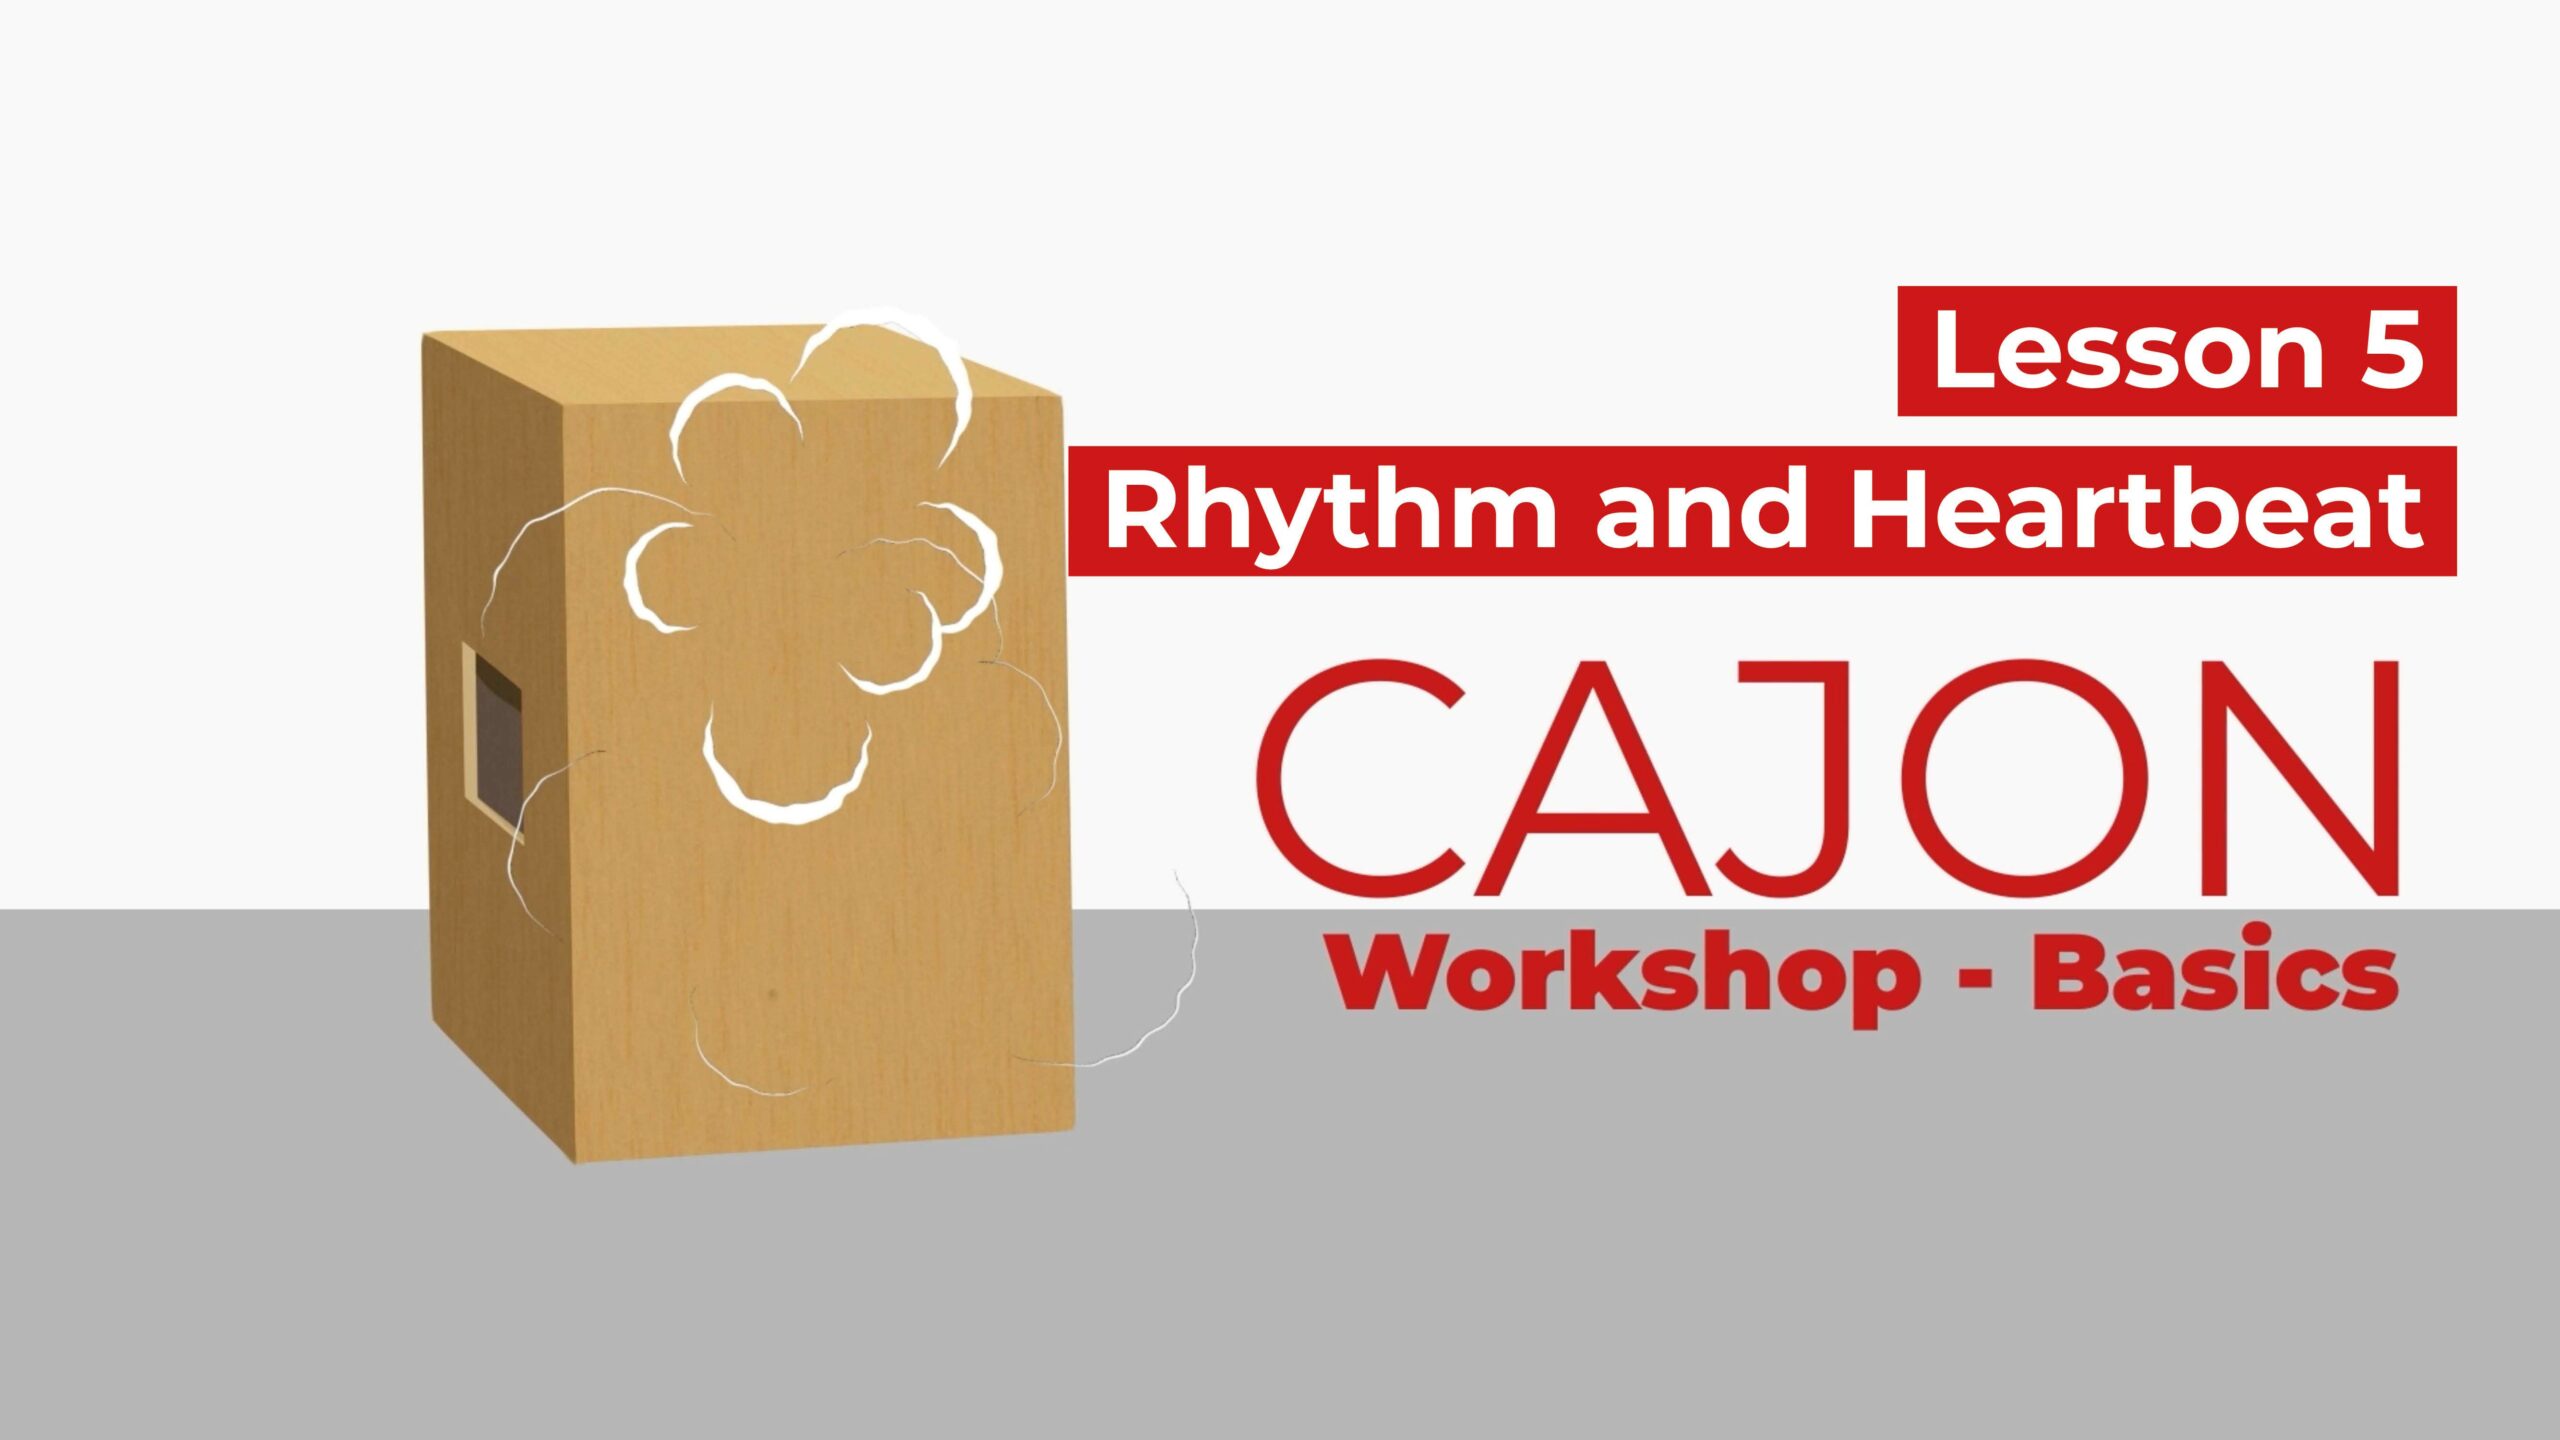 Lesson 5 - Rhythm and Heartbeat